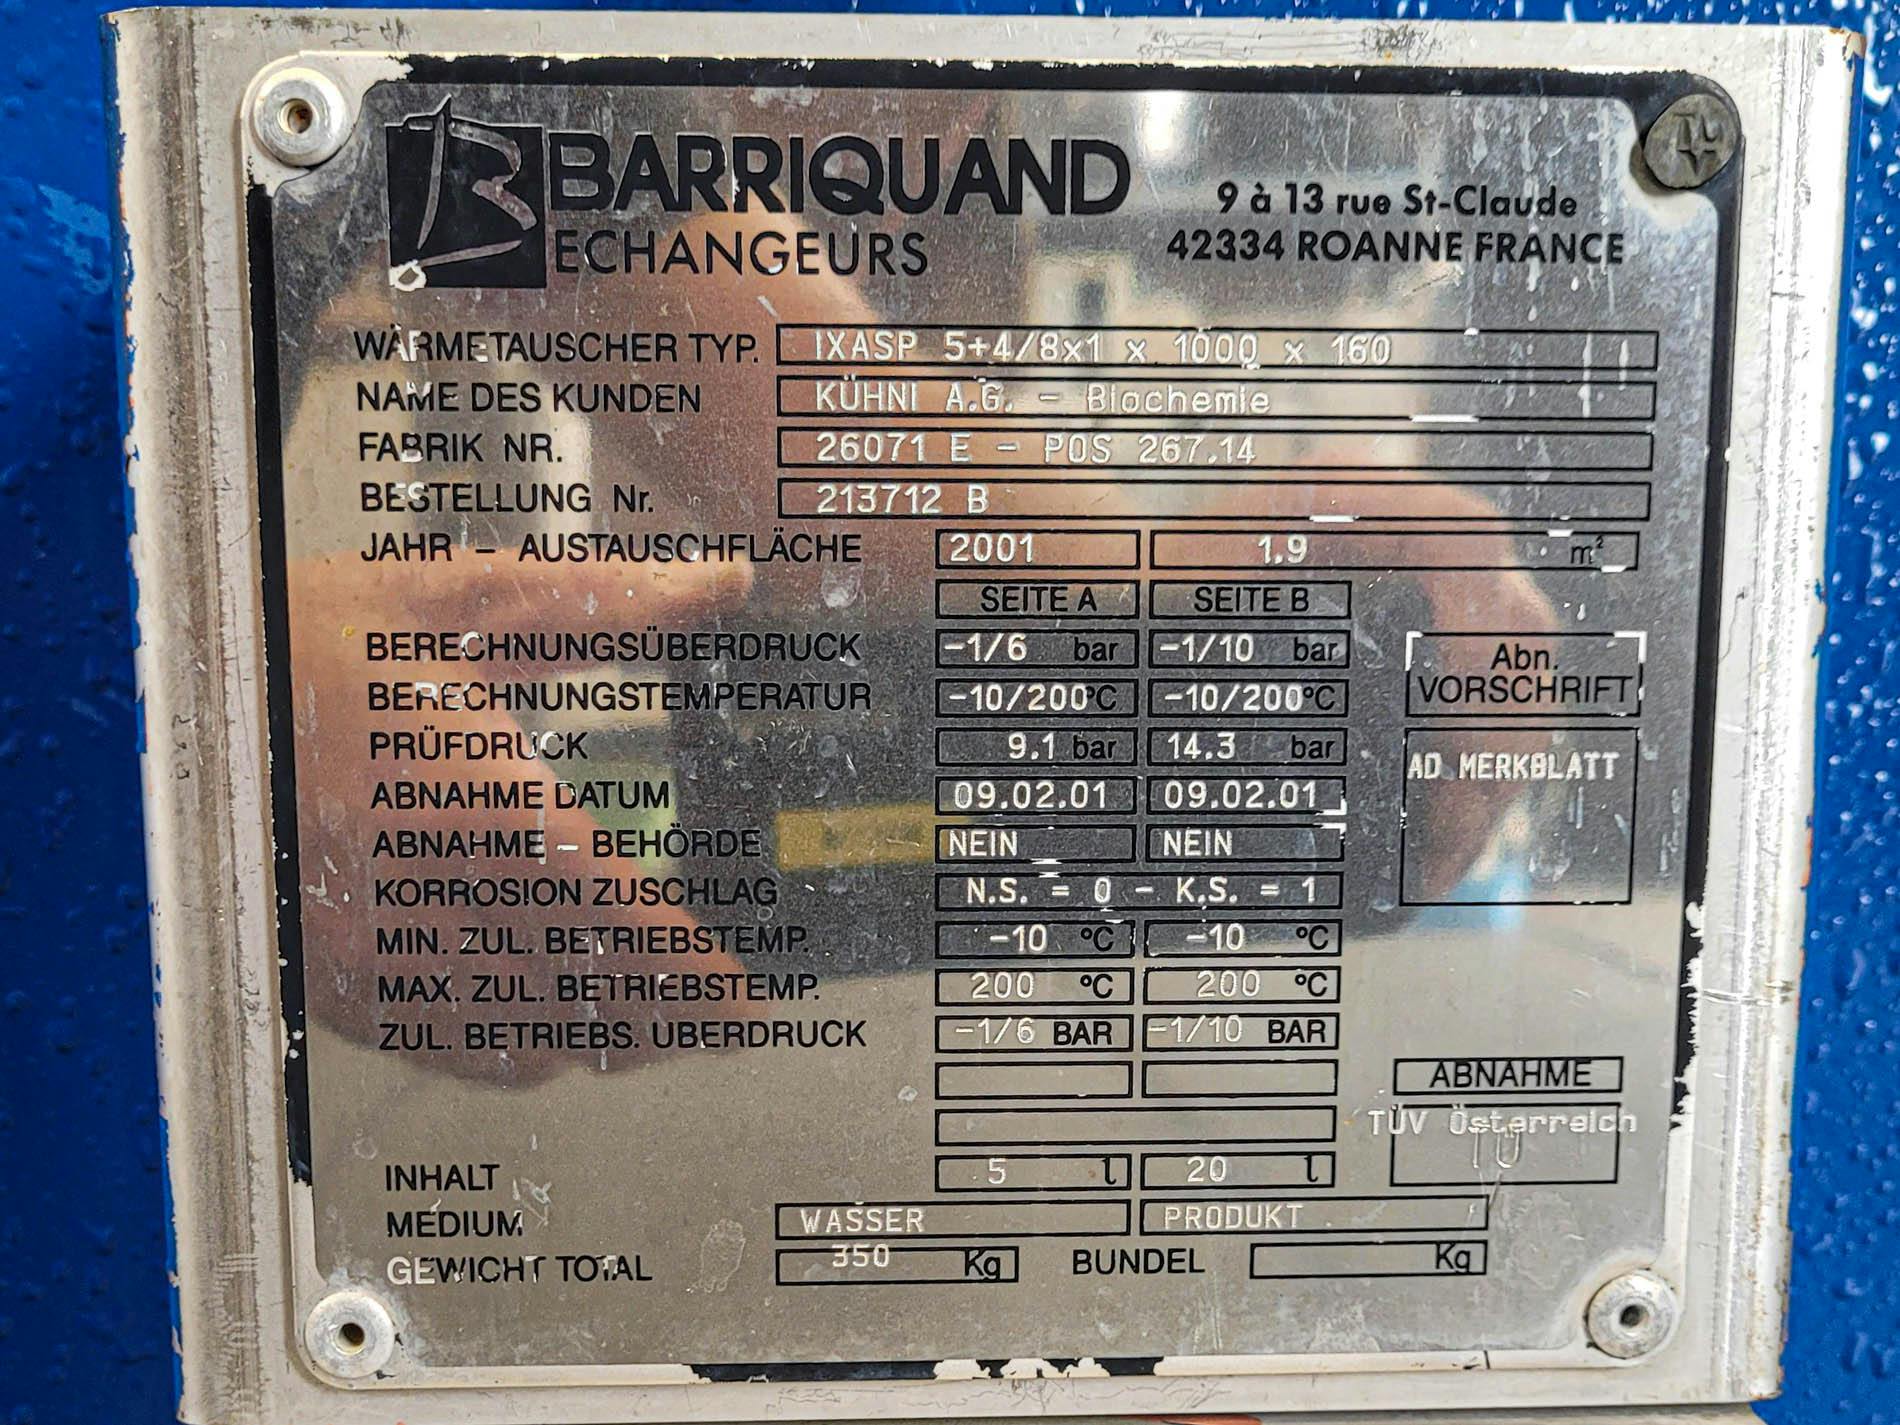 Barriquand IXAP 5+4/8x1 x 1000 x 160 - 1,9 m² - Пластинчатый теплообменник - image 9